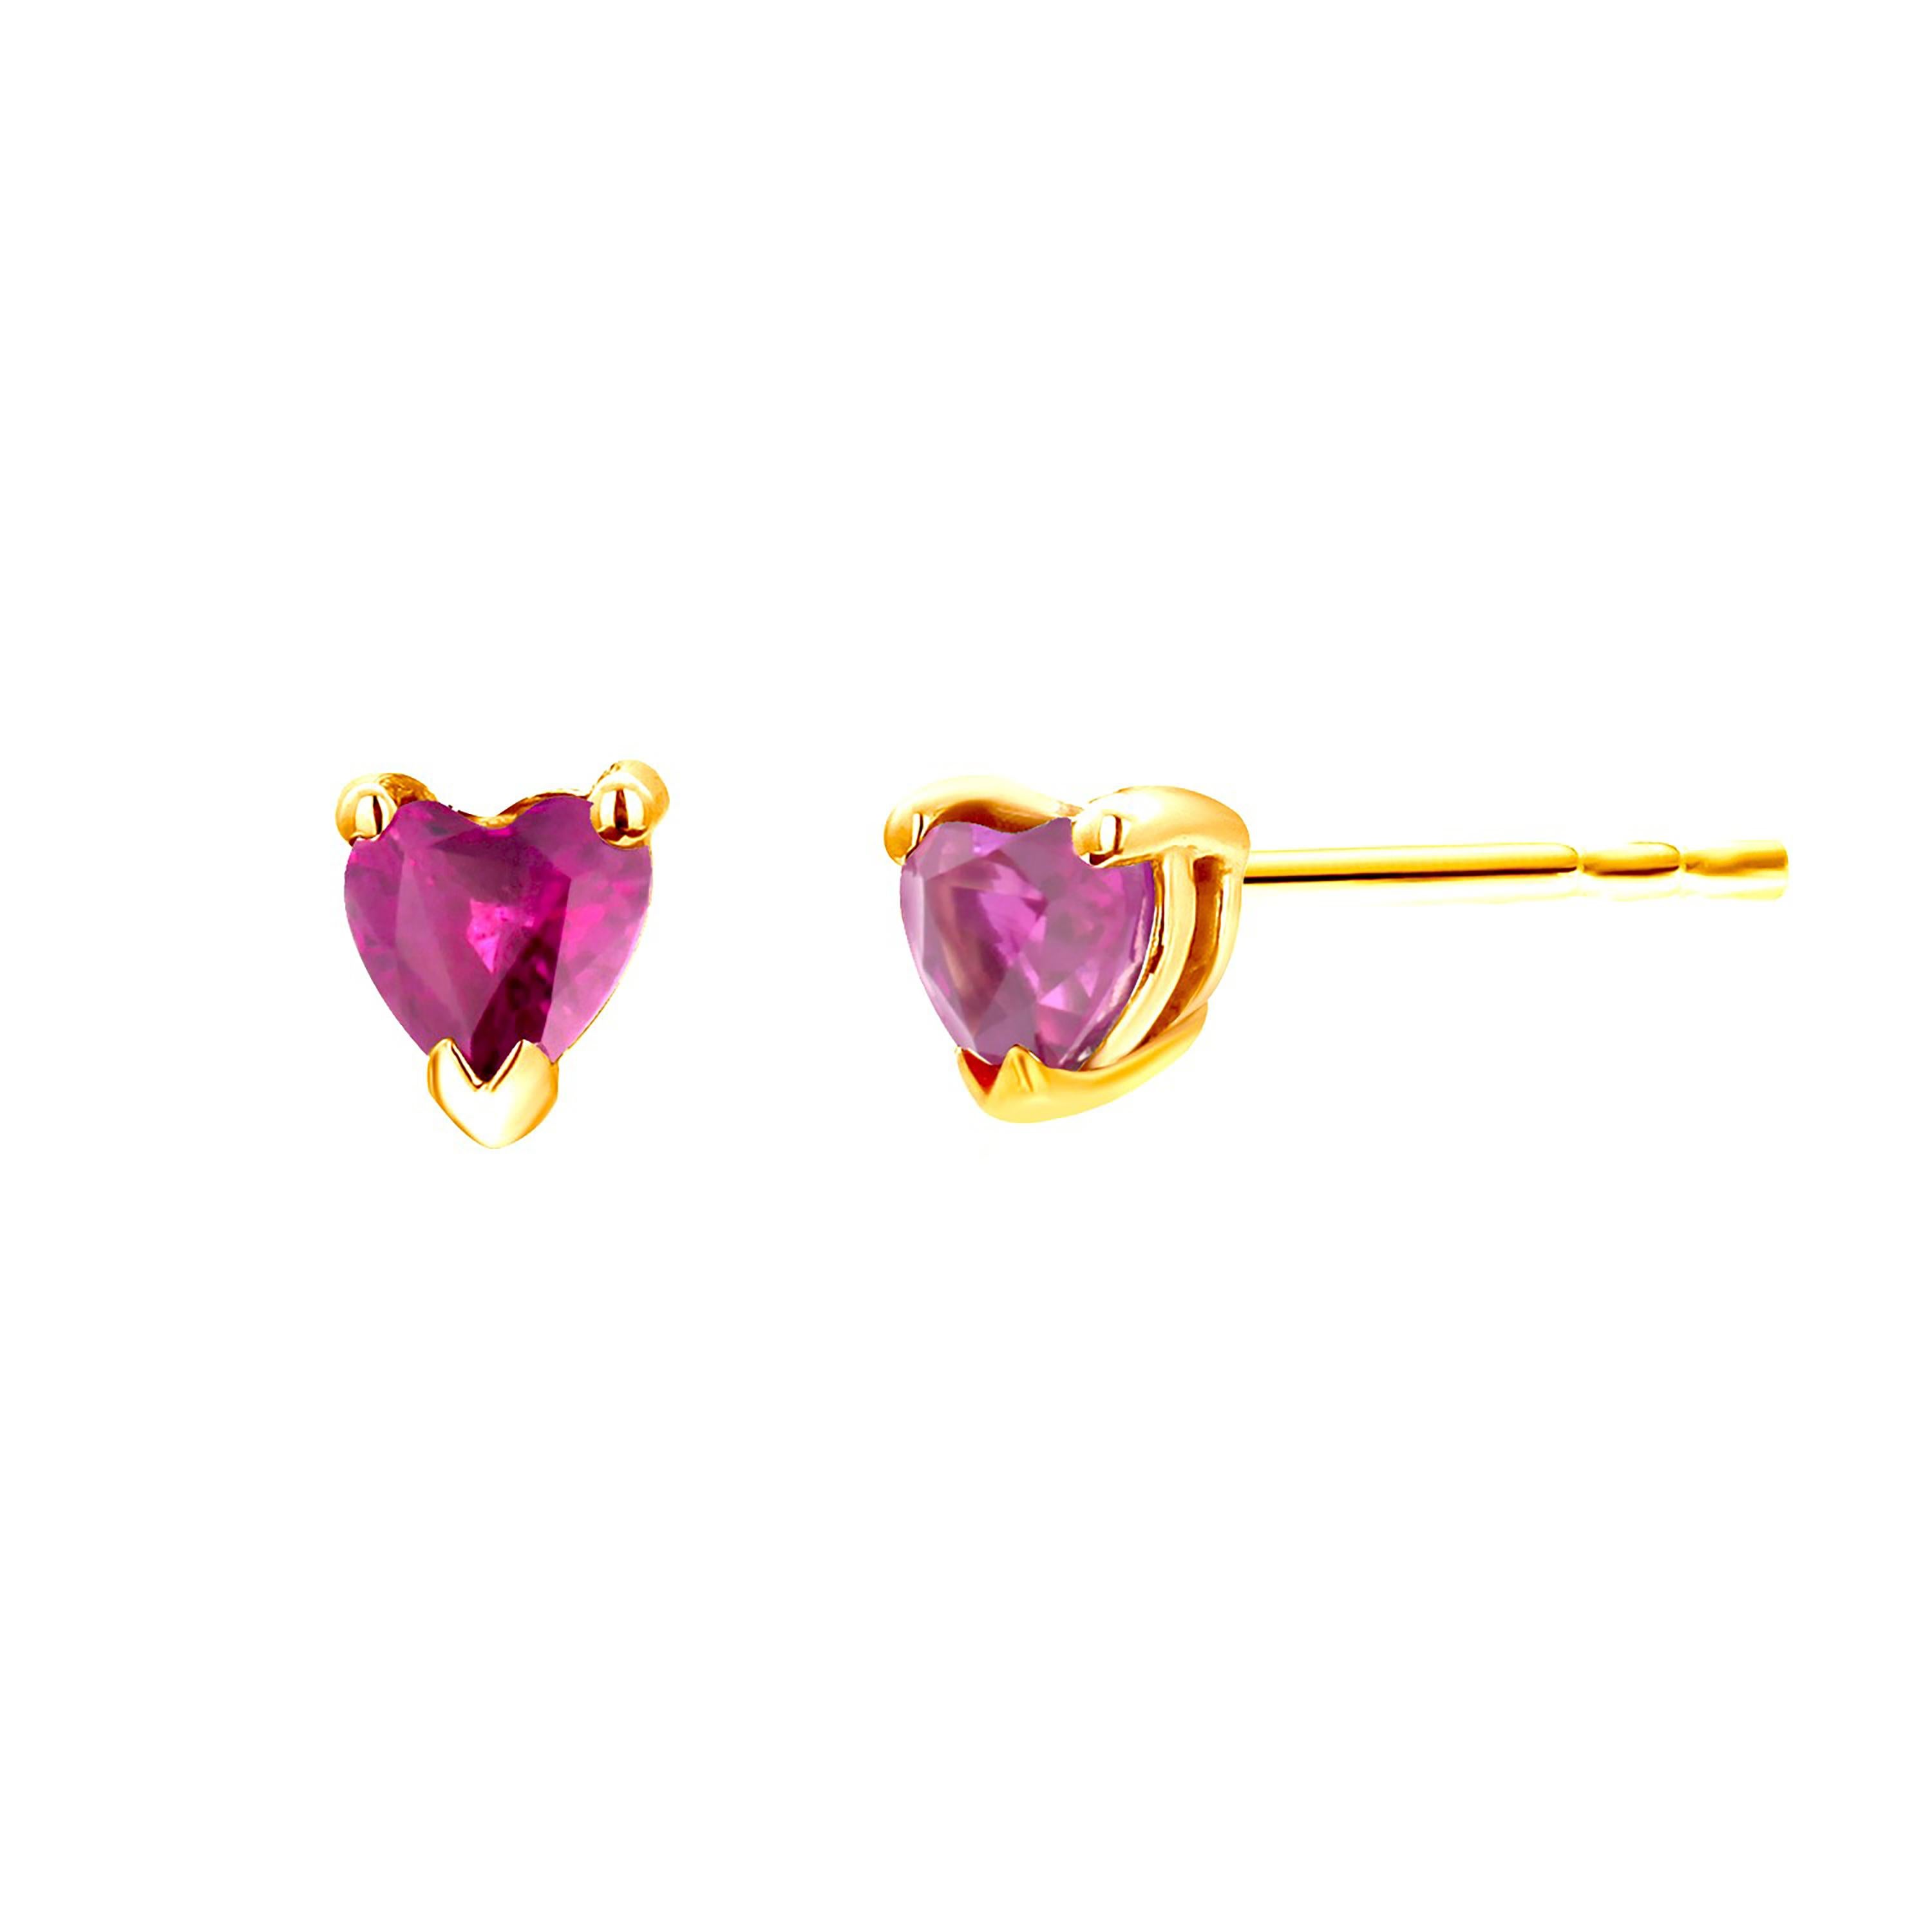 Heart Shaped Rubies Set in Yellow Gold Stud Earrings 3